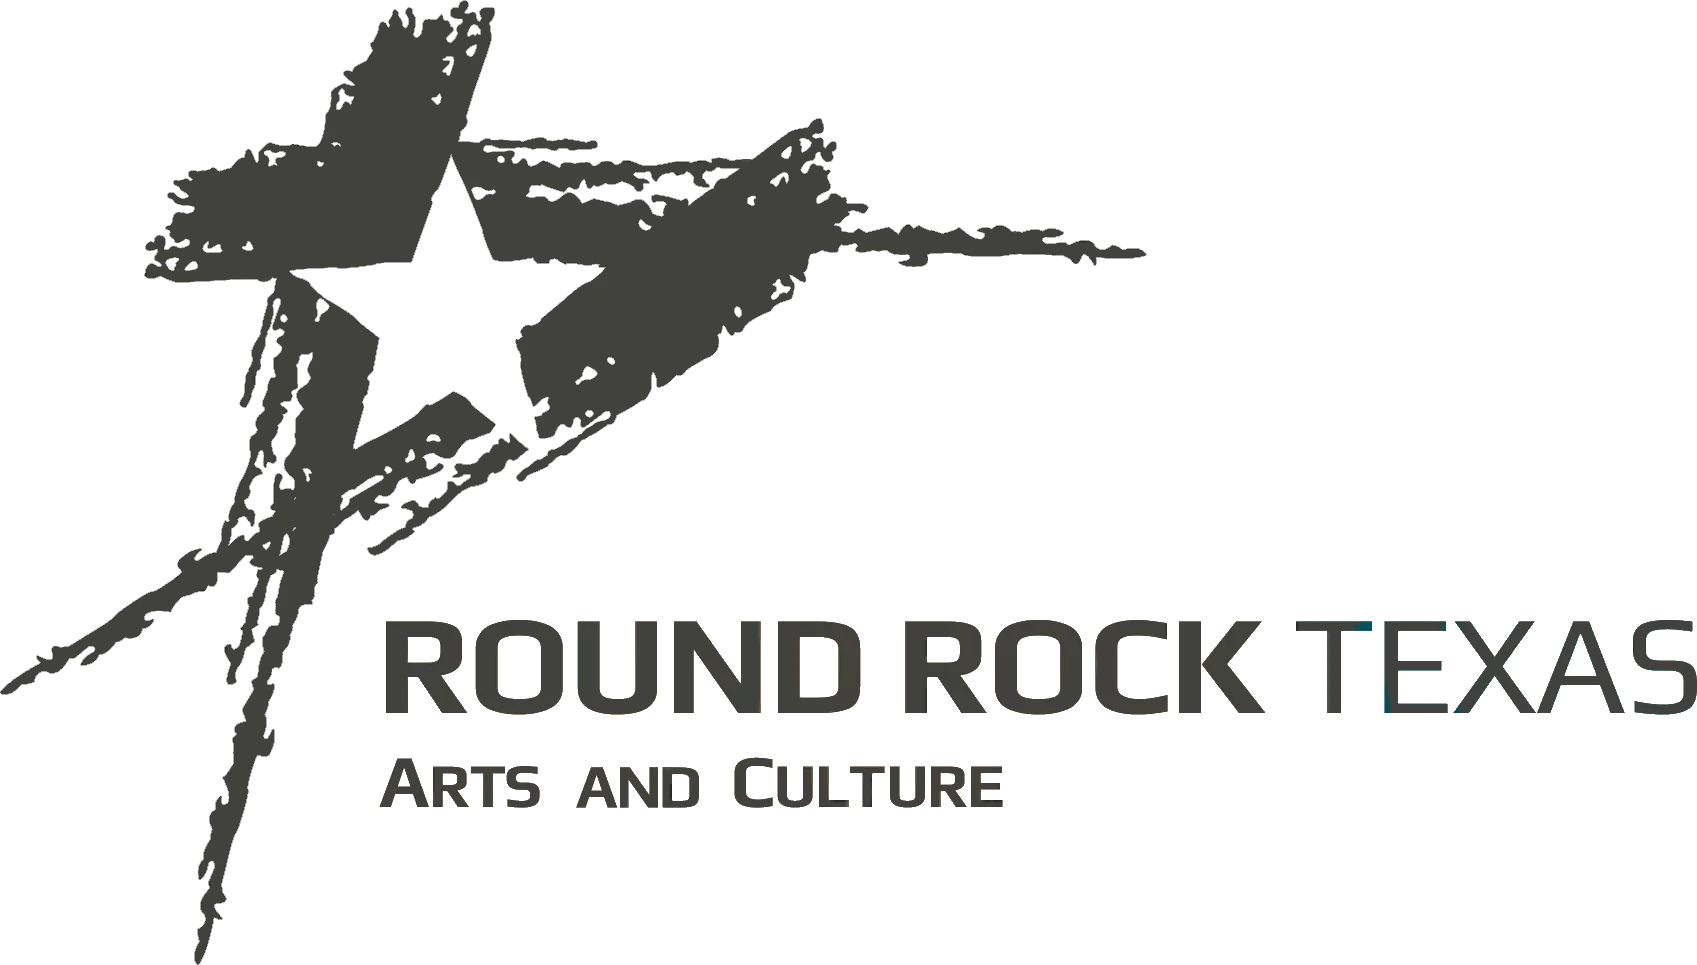 Round Rock - Arts & Culture